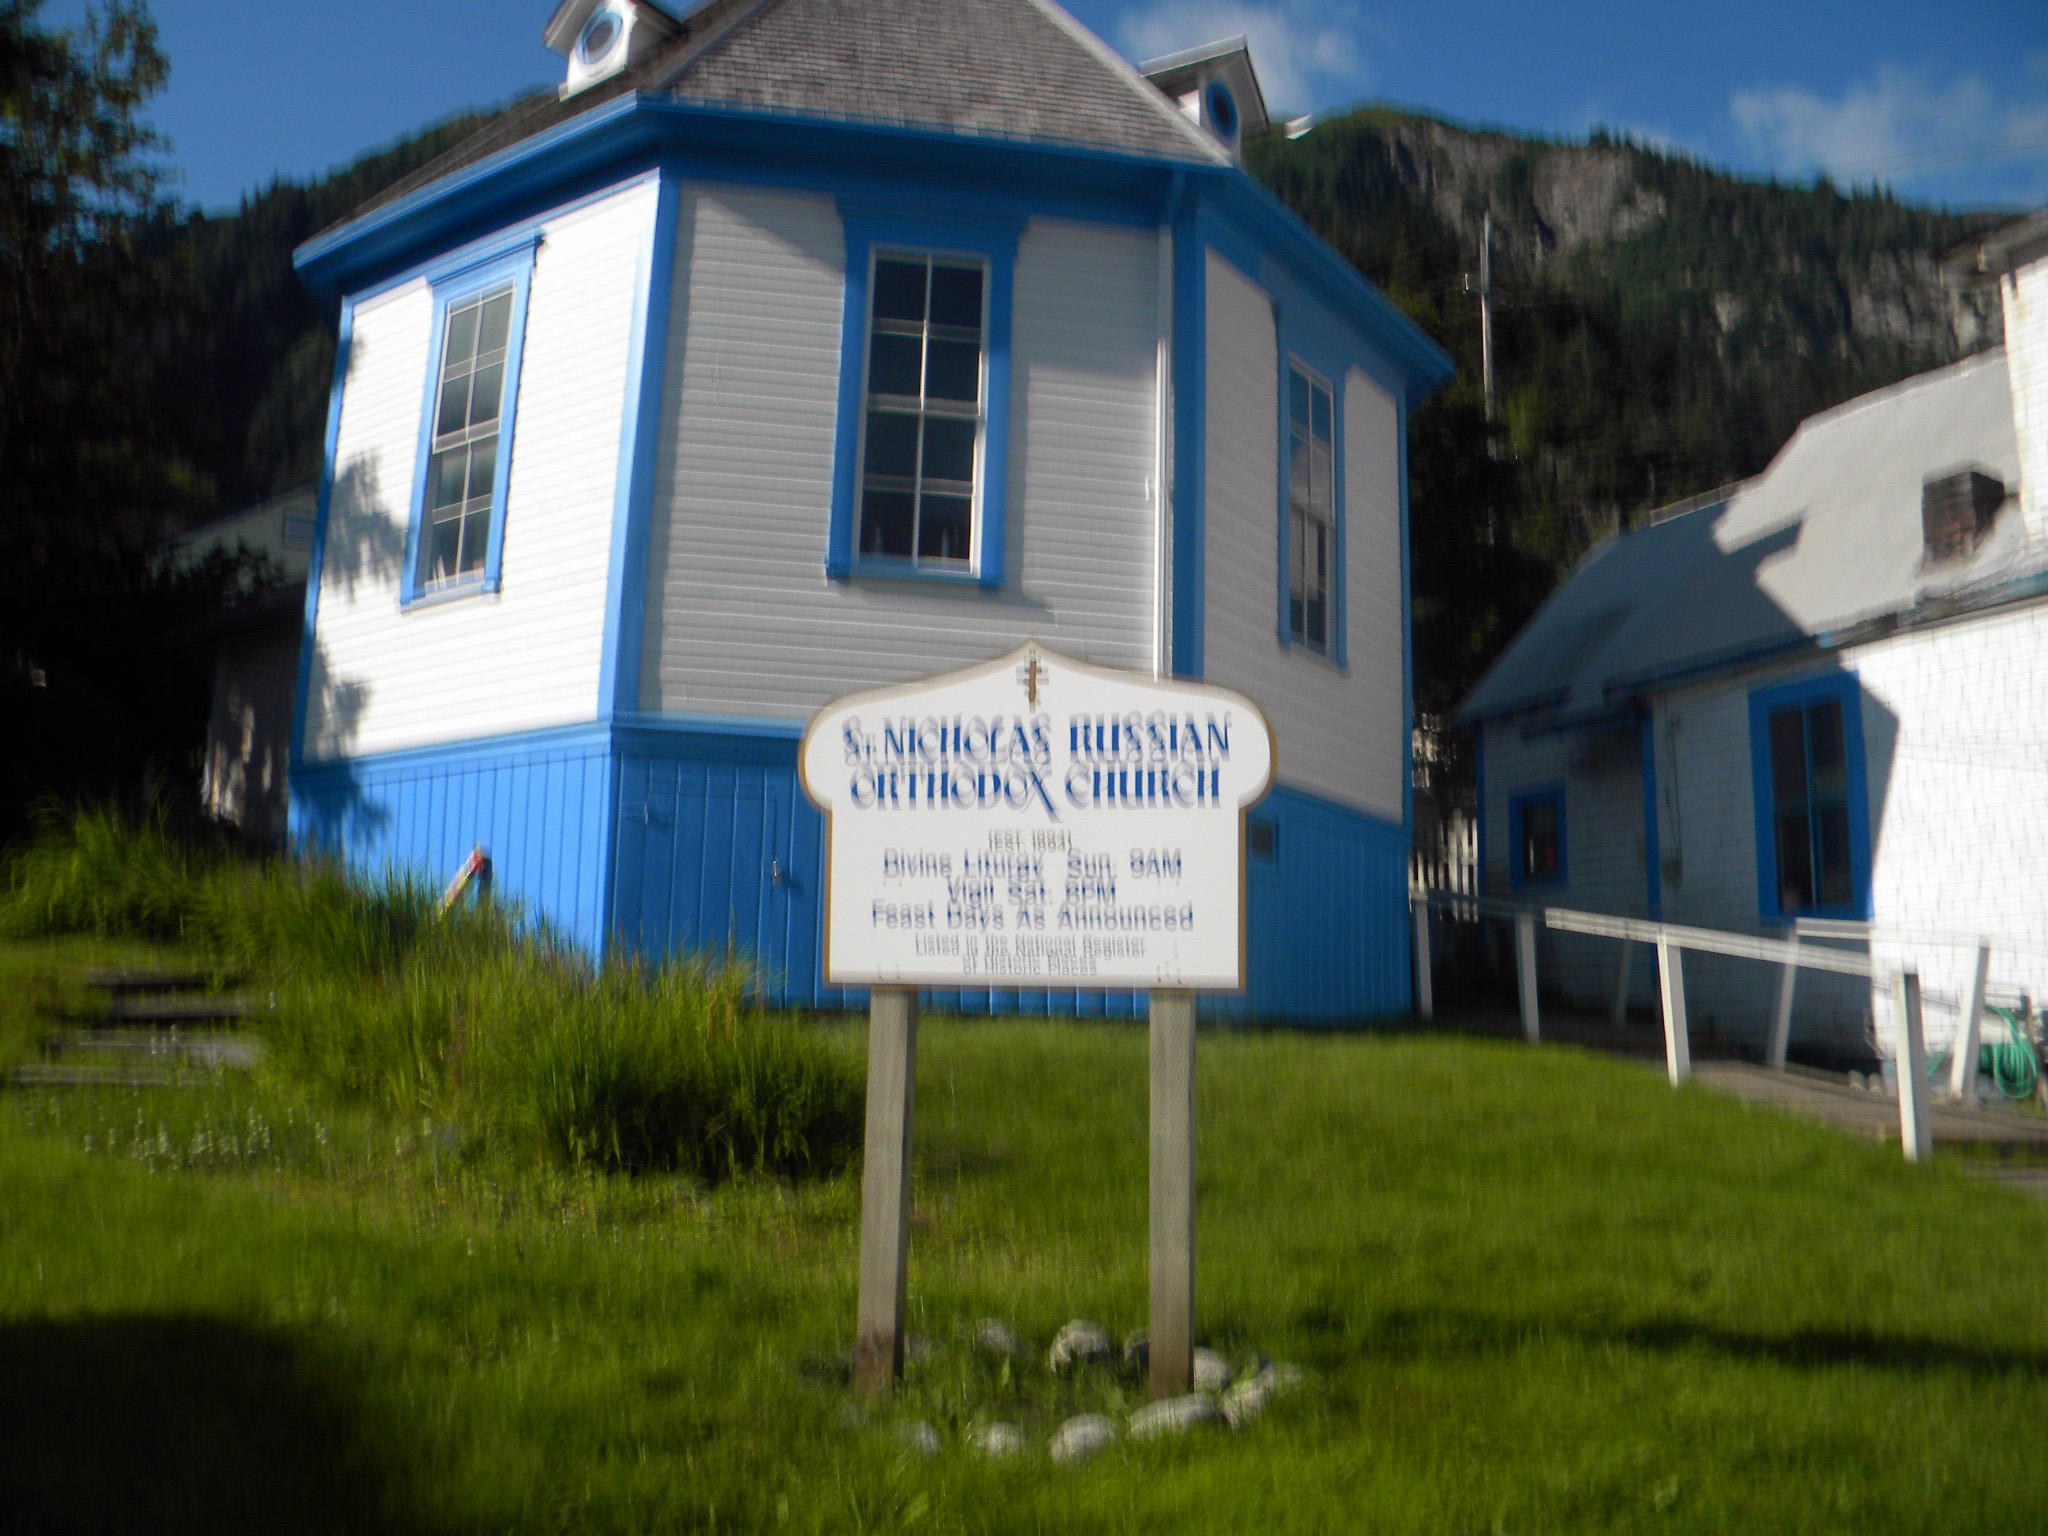 St. Nicholas Orchodox Church, Juneau, Alaska, summer 2012